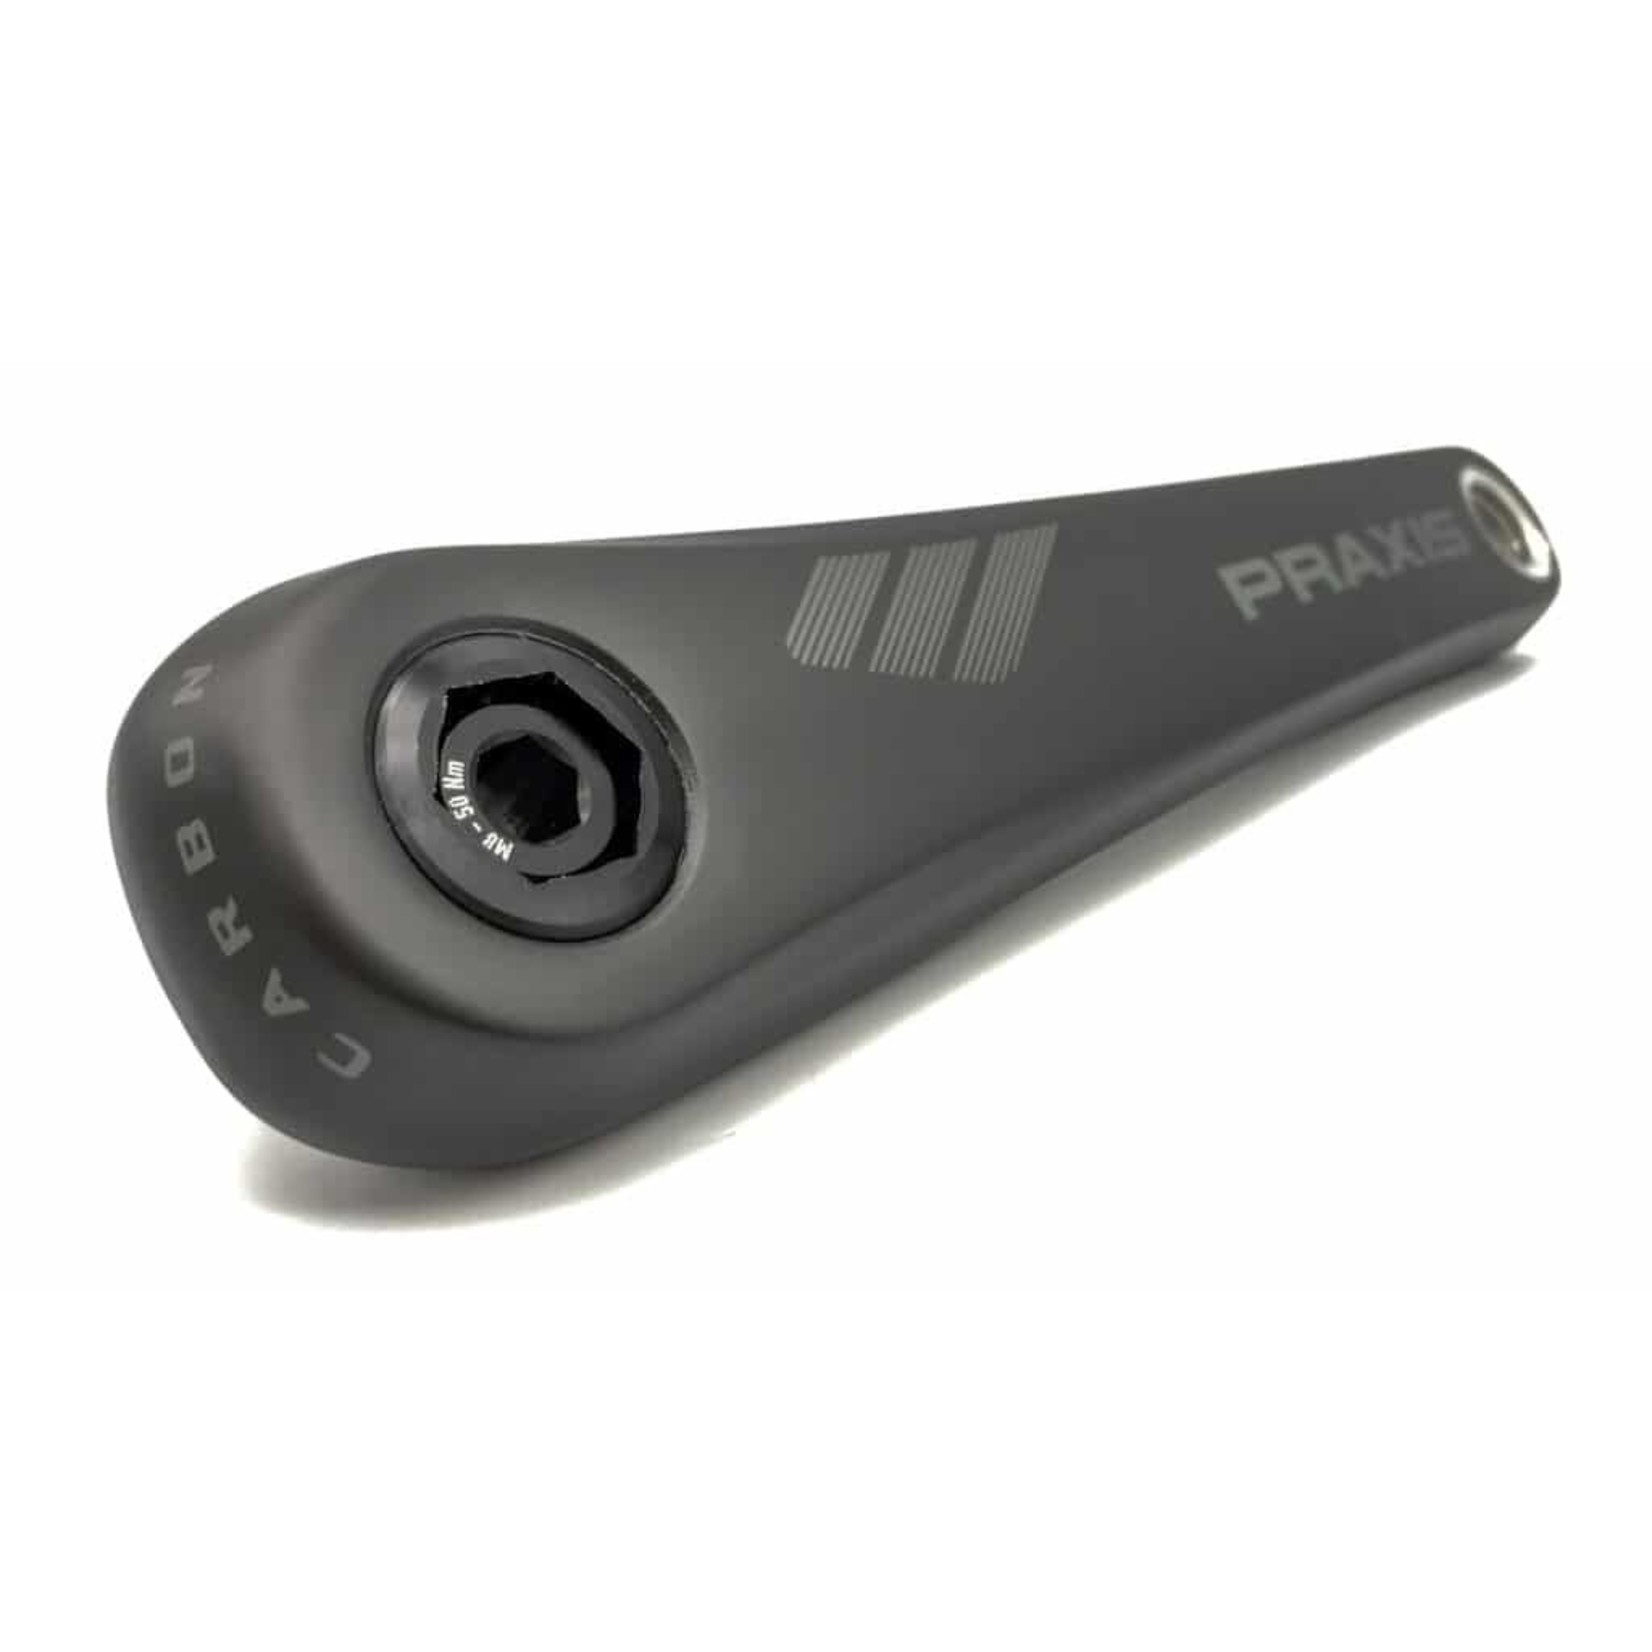 Praxis Praxis e-Bike cranks - Specialized Carbon,165mm